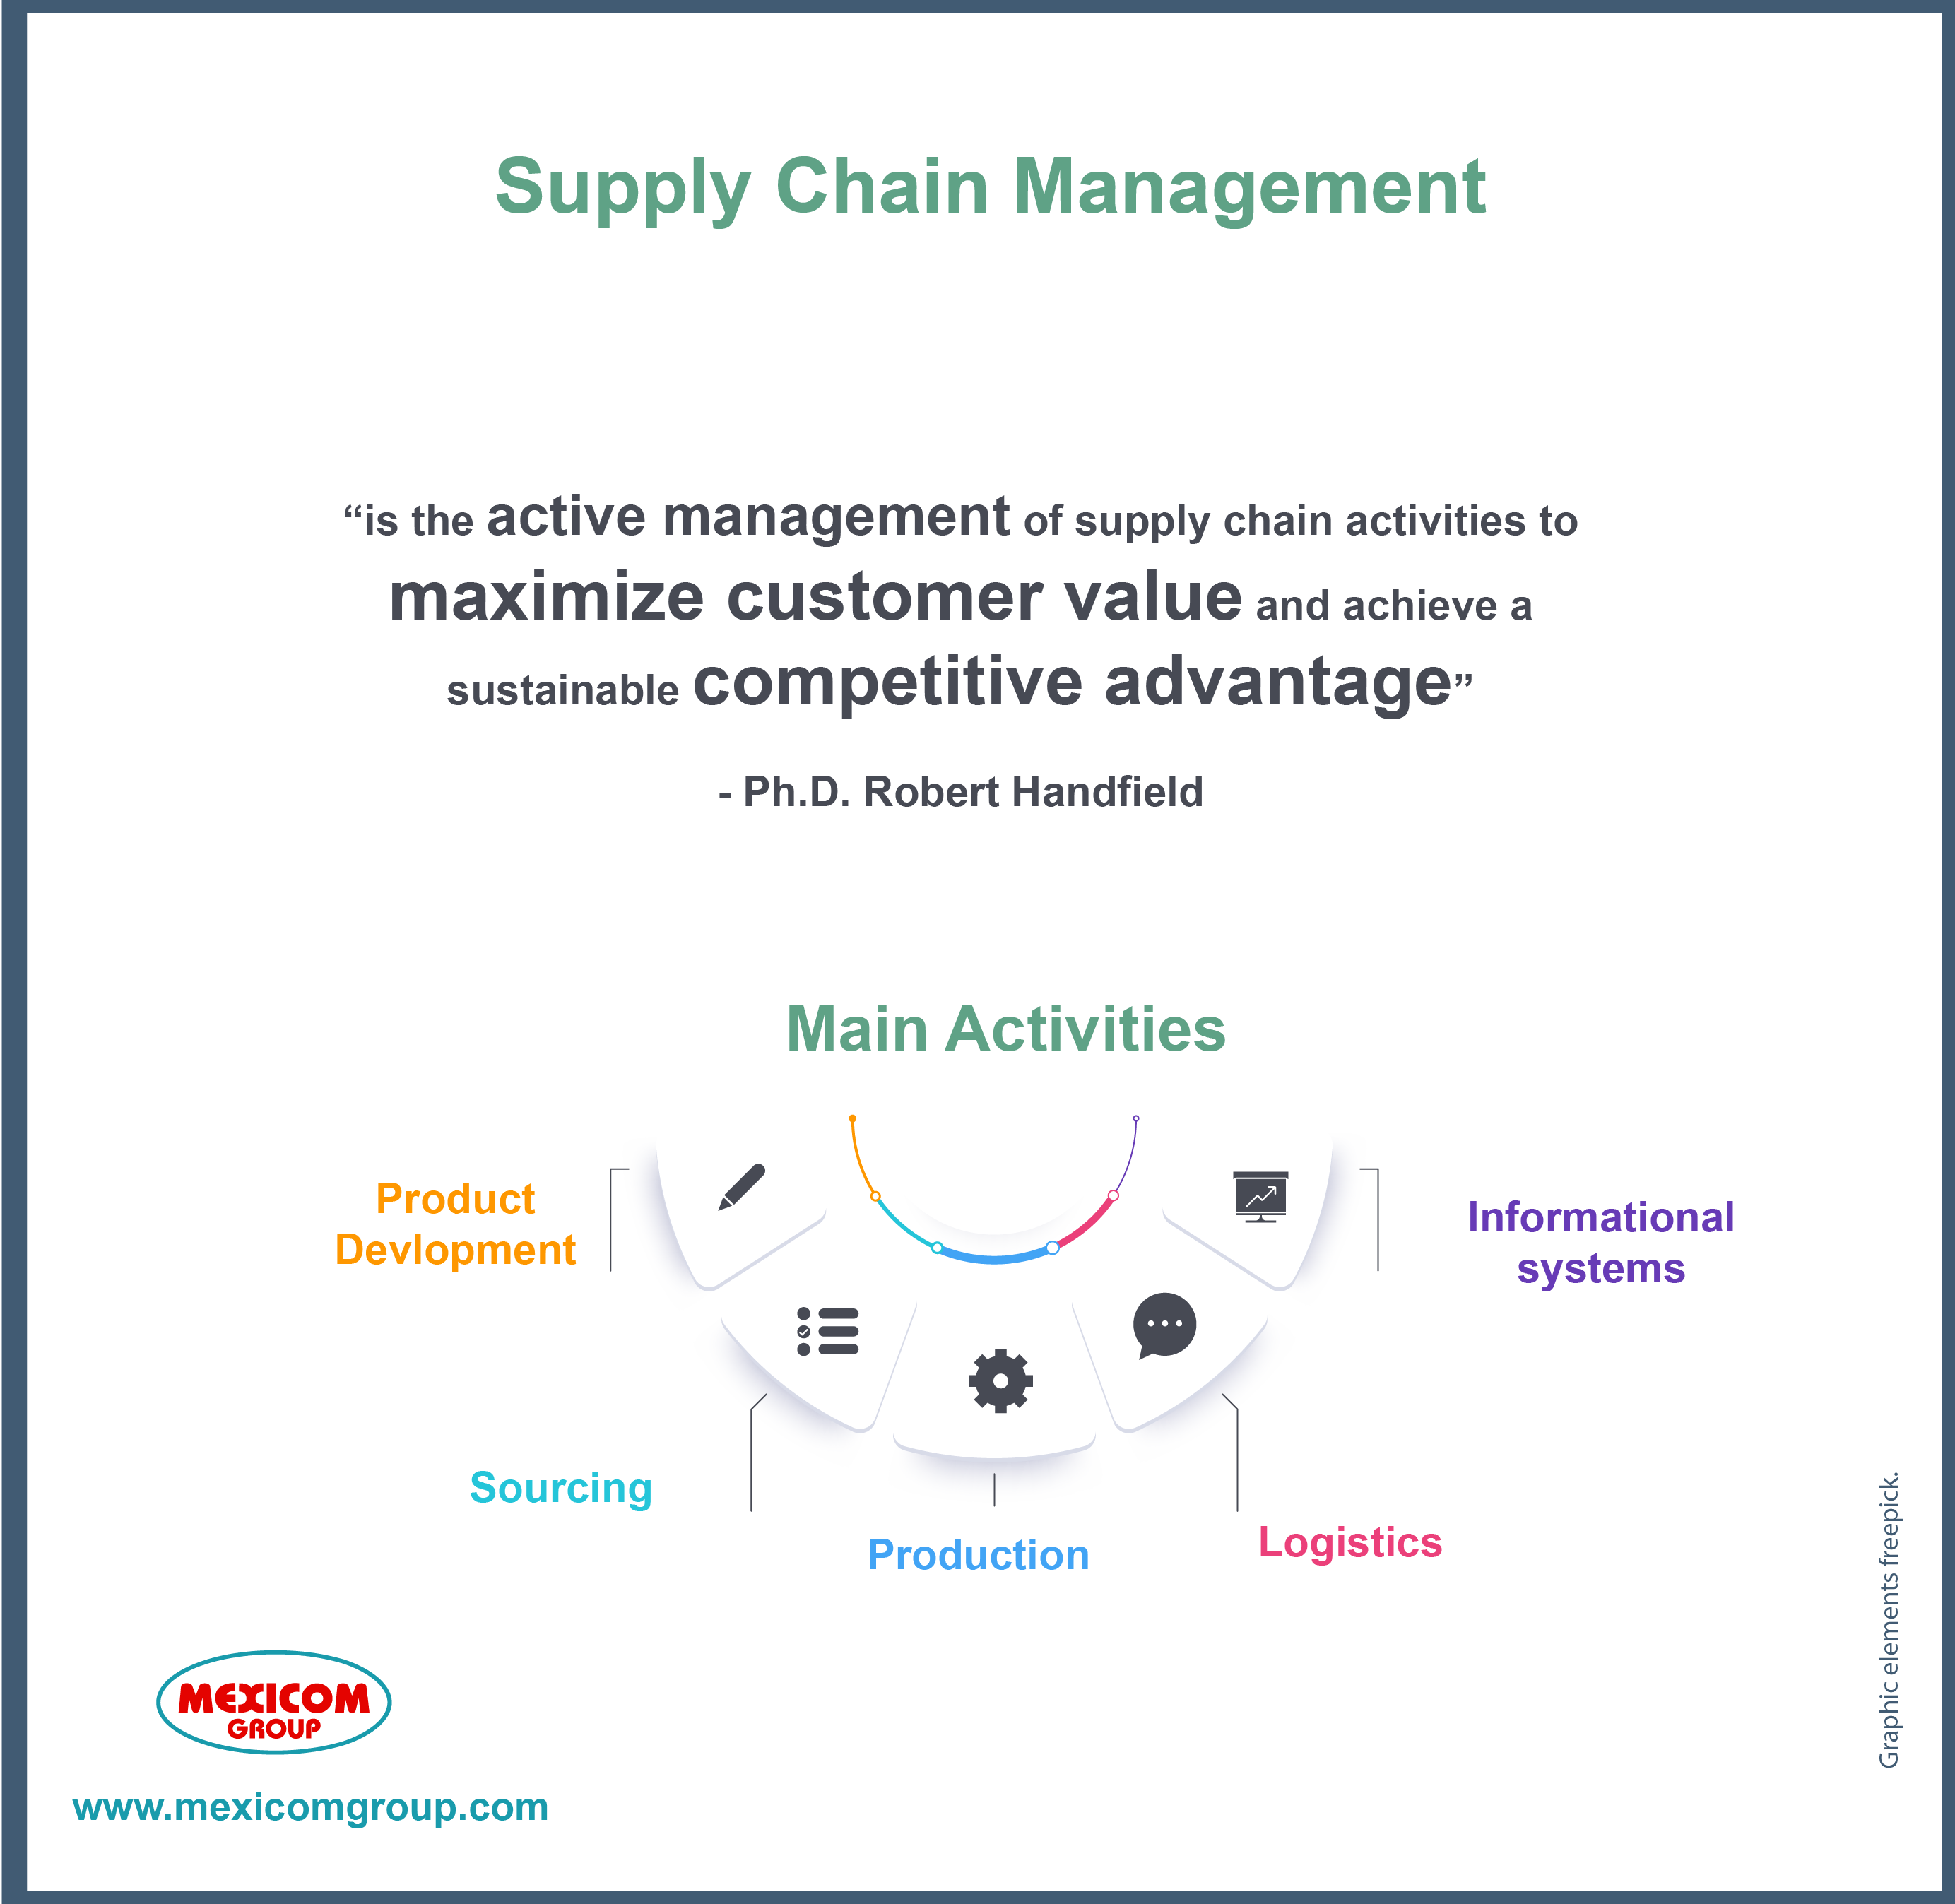 Supply chain Management definition